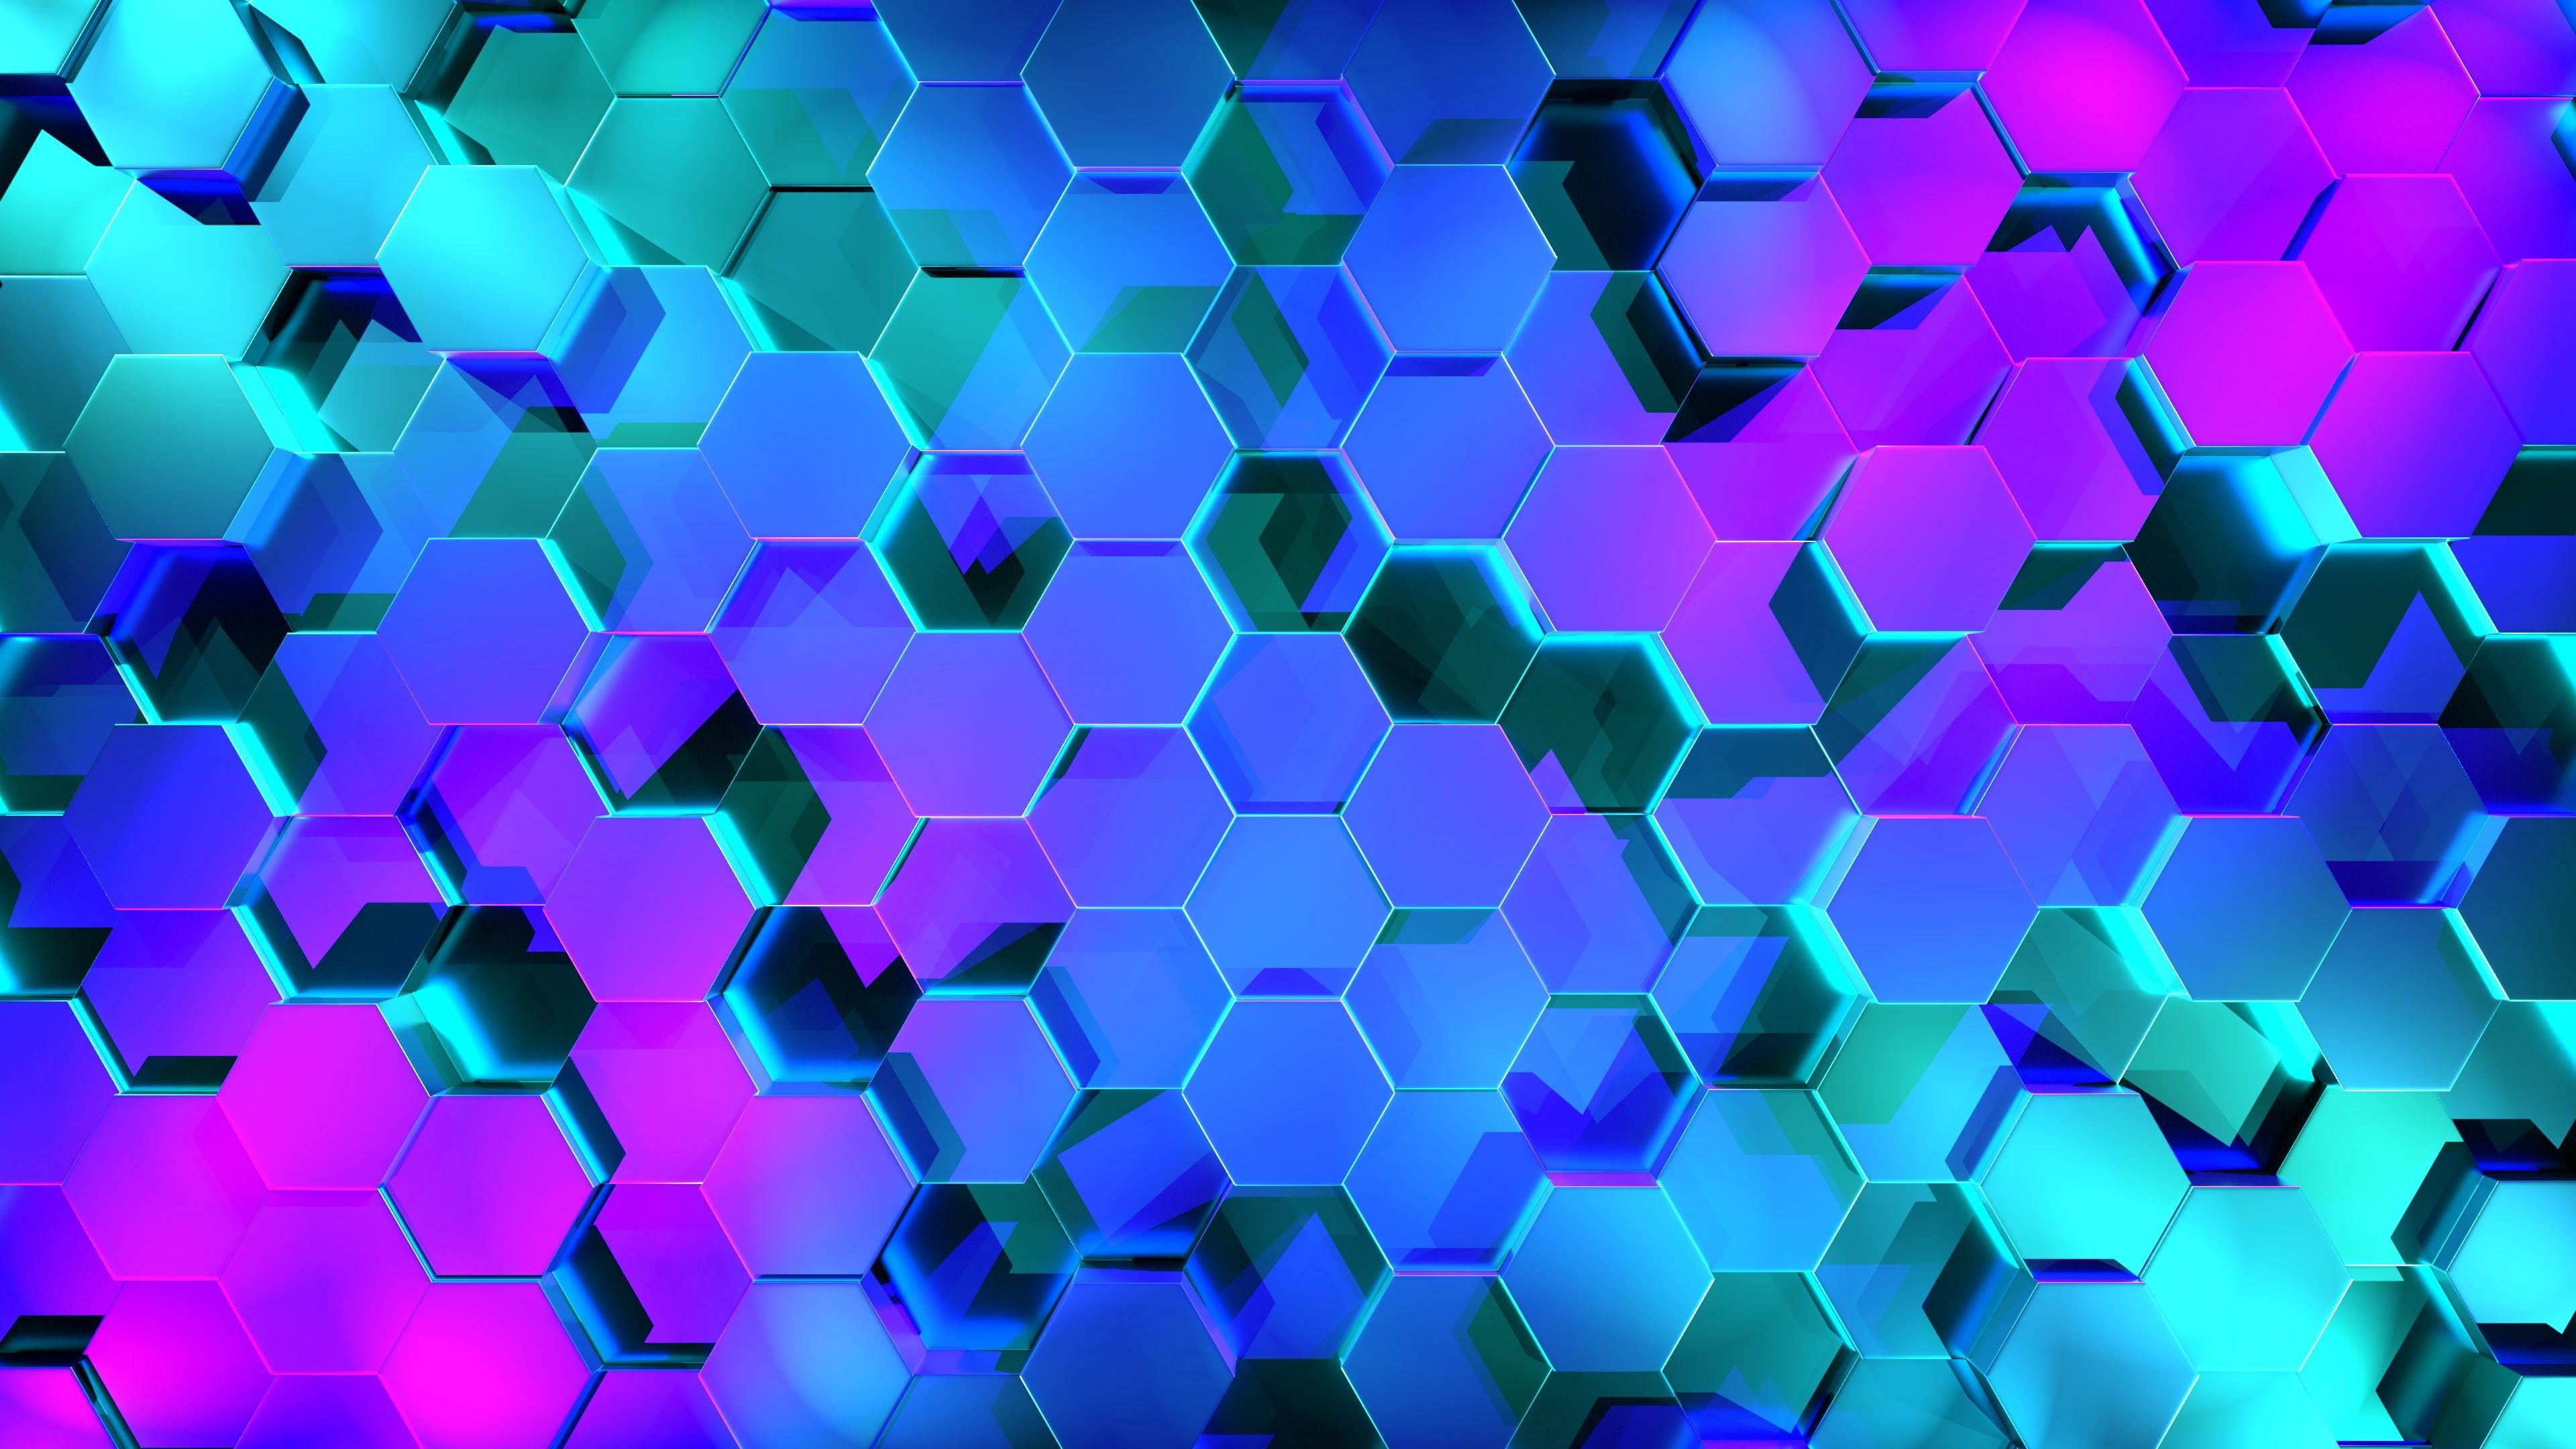 3840x2160 abstract #3D #hexagon digital art #geometry #neon #4K #wallpaper #hdwallpaper #desktop | Hexagon wallpaper, Abstract wallpaper, Neon wallpaper